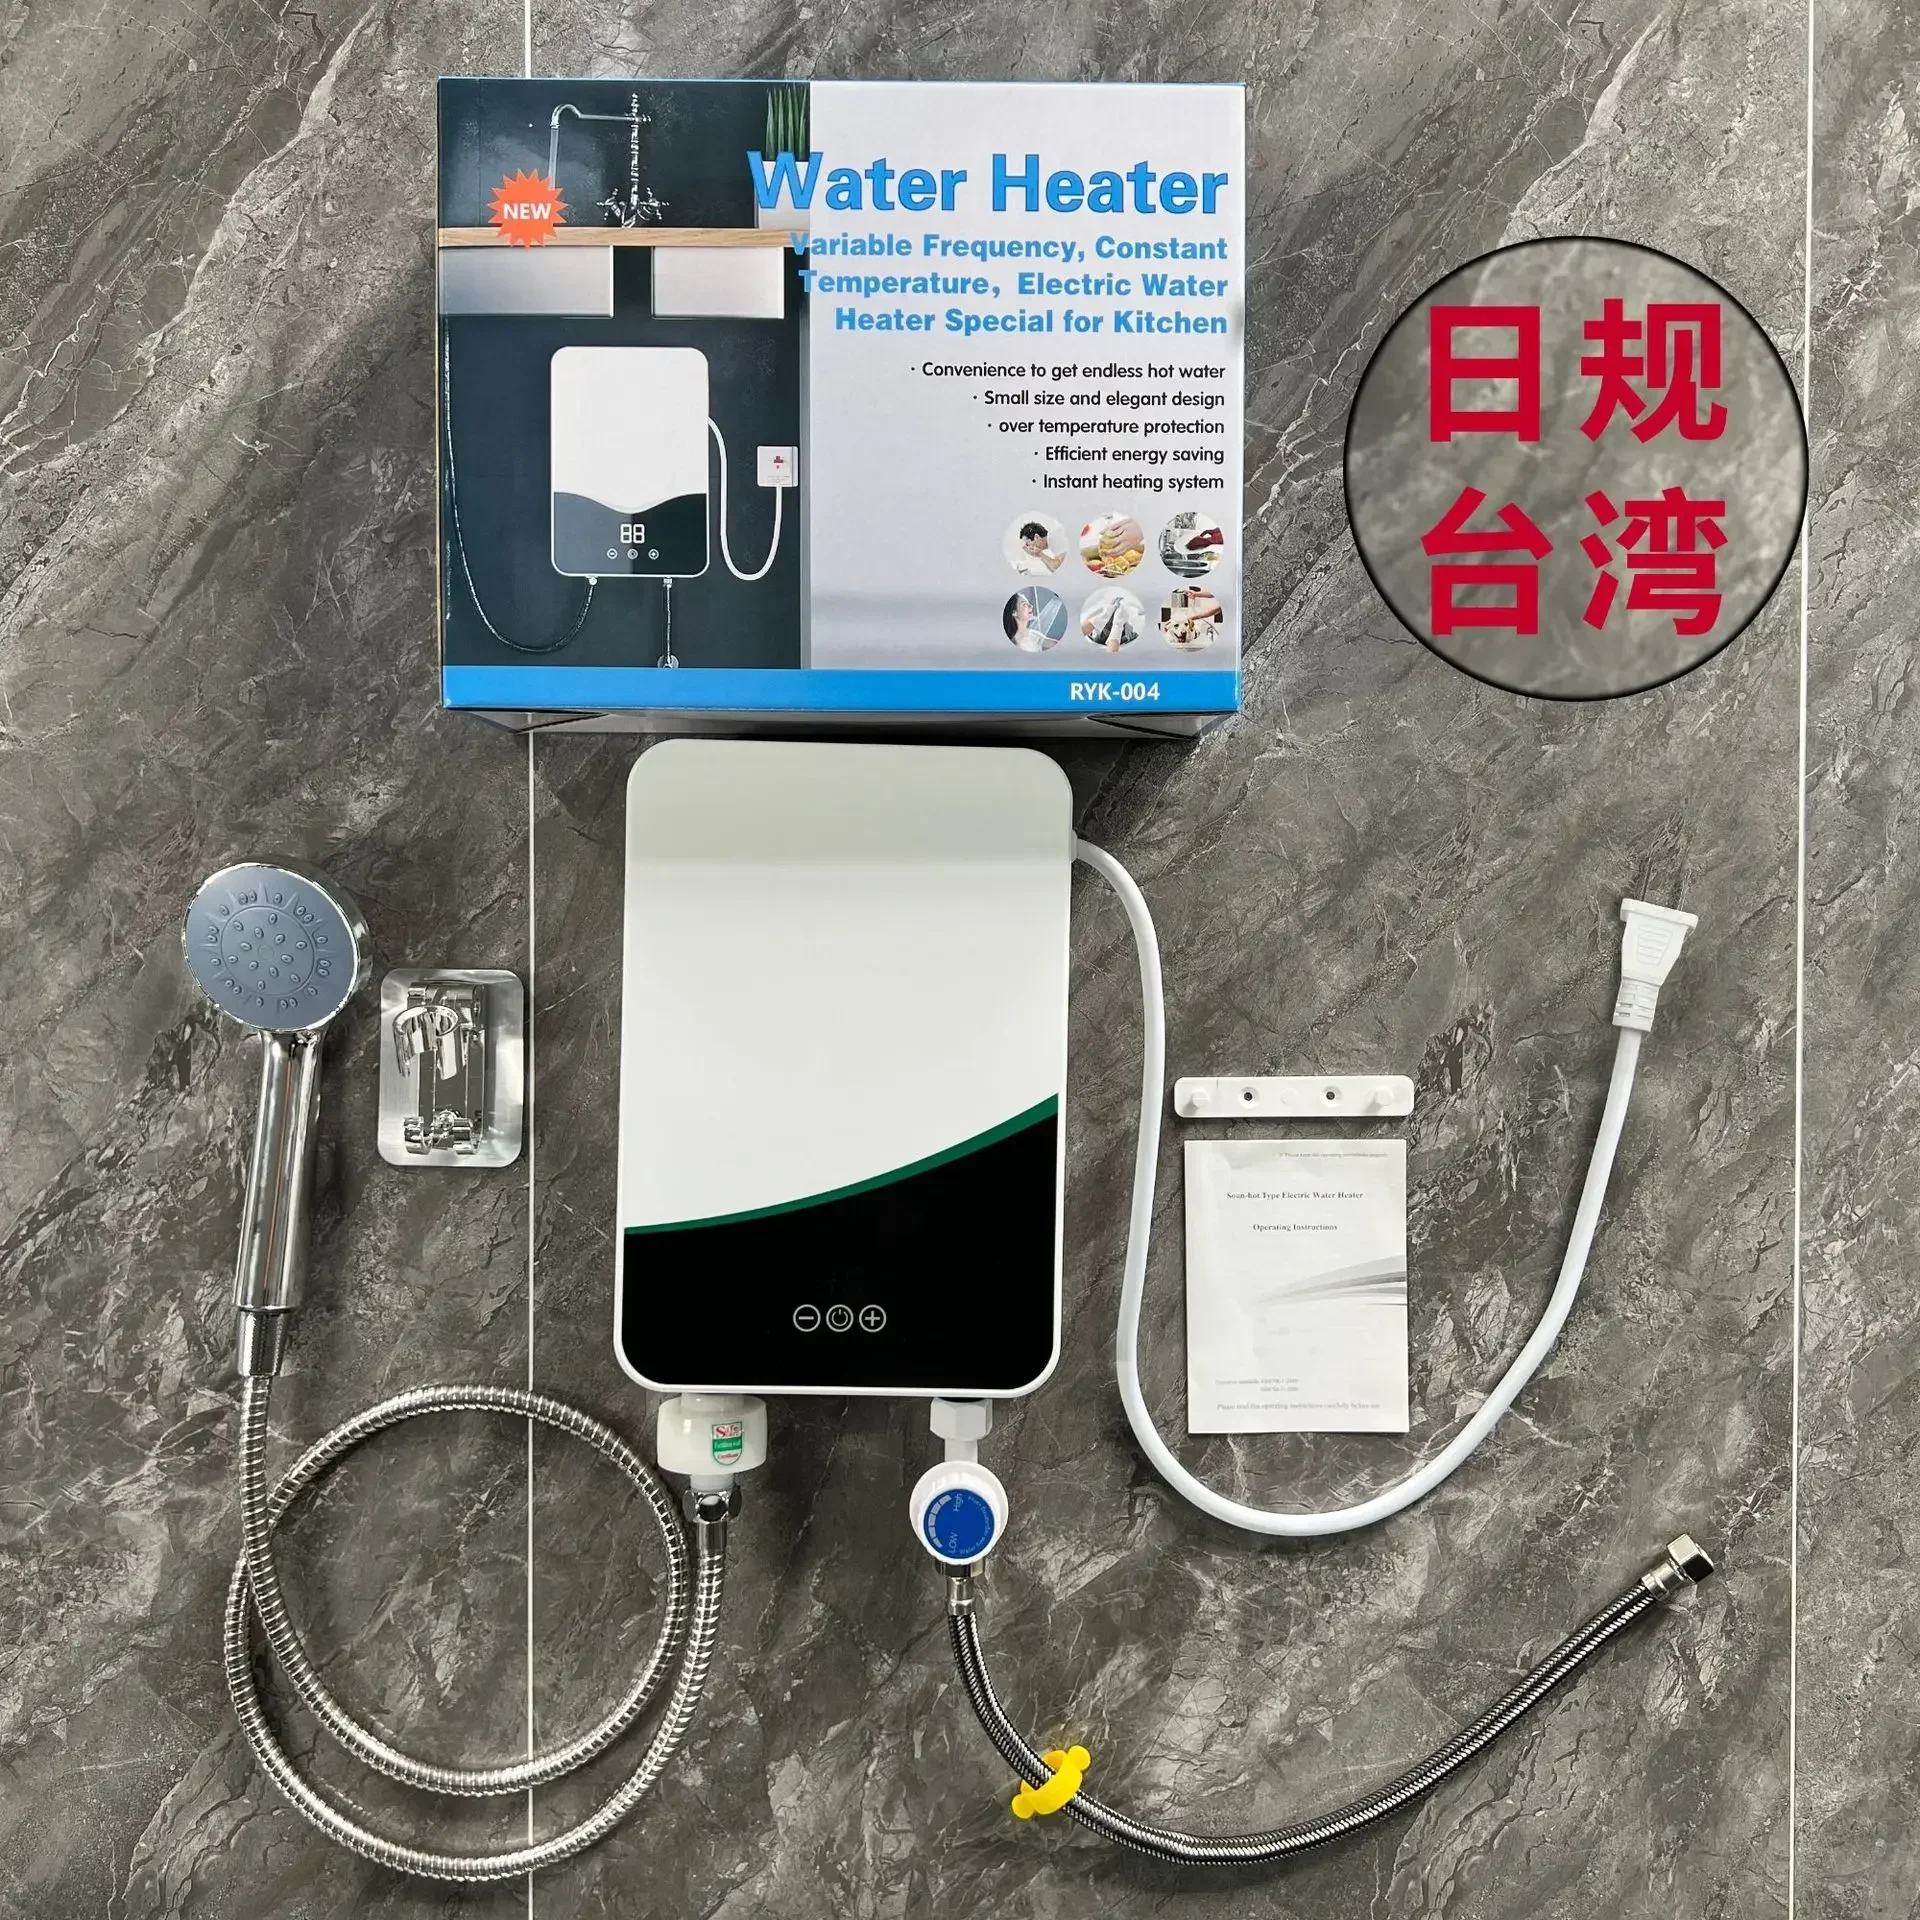 Instant електрически бойлер без резервоар, интелигентен бойлер самомодулиращ се без загуби в режим на готовност, домакински душ гореща вода . ' - ' . 3